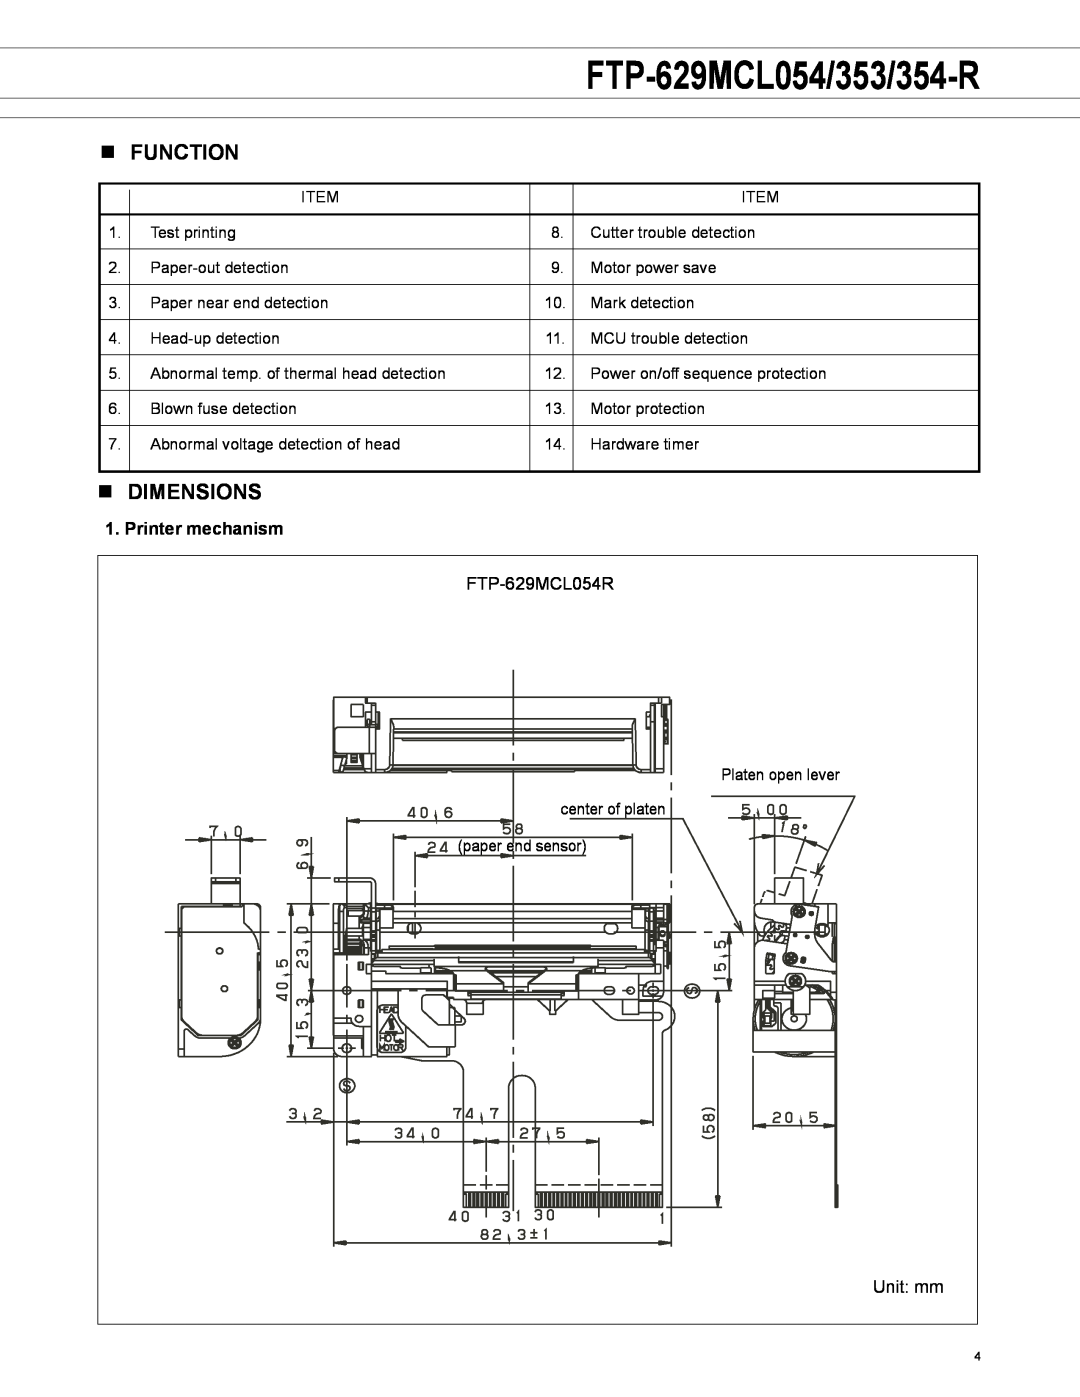 Fujitsu manual n Function, n Dimensions, FTP-629MCL054/353/354-R, Printer mechanism 